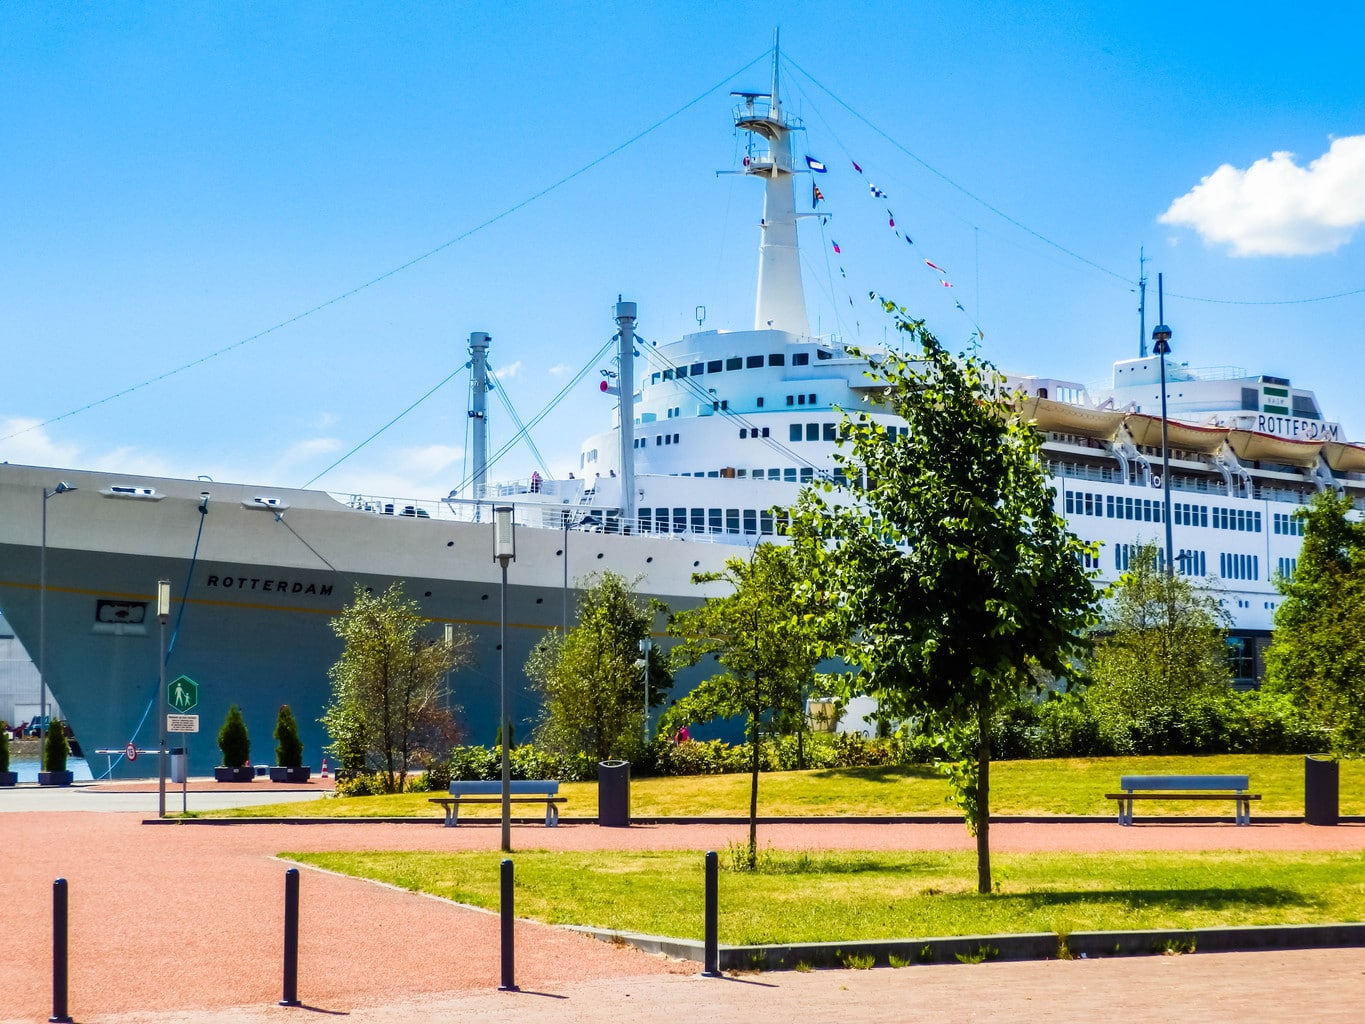 SS Rotterdam cruise ship hotel